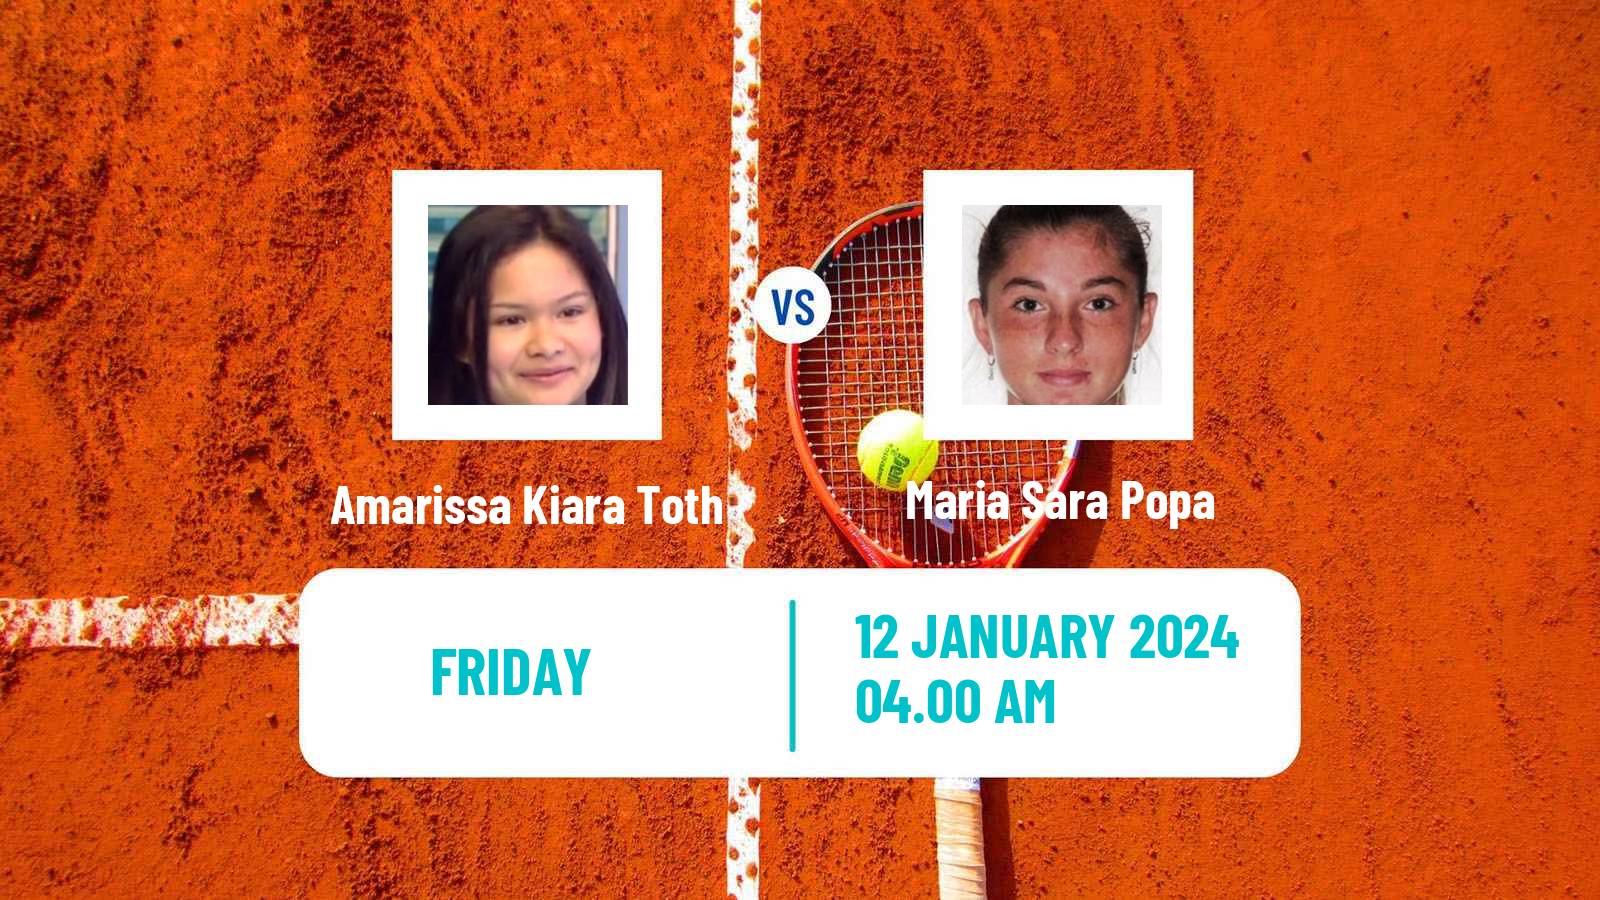 Tennis ITF W35 Antalya Women Amarissa Kiara Toth - Maria Sara Popa